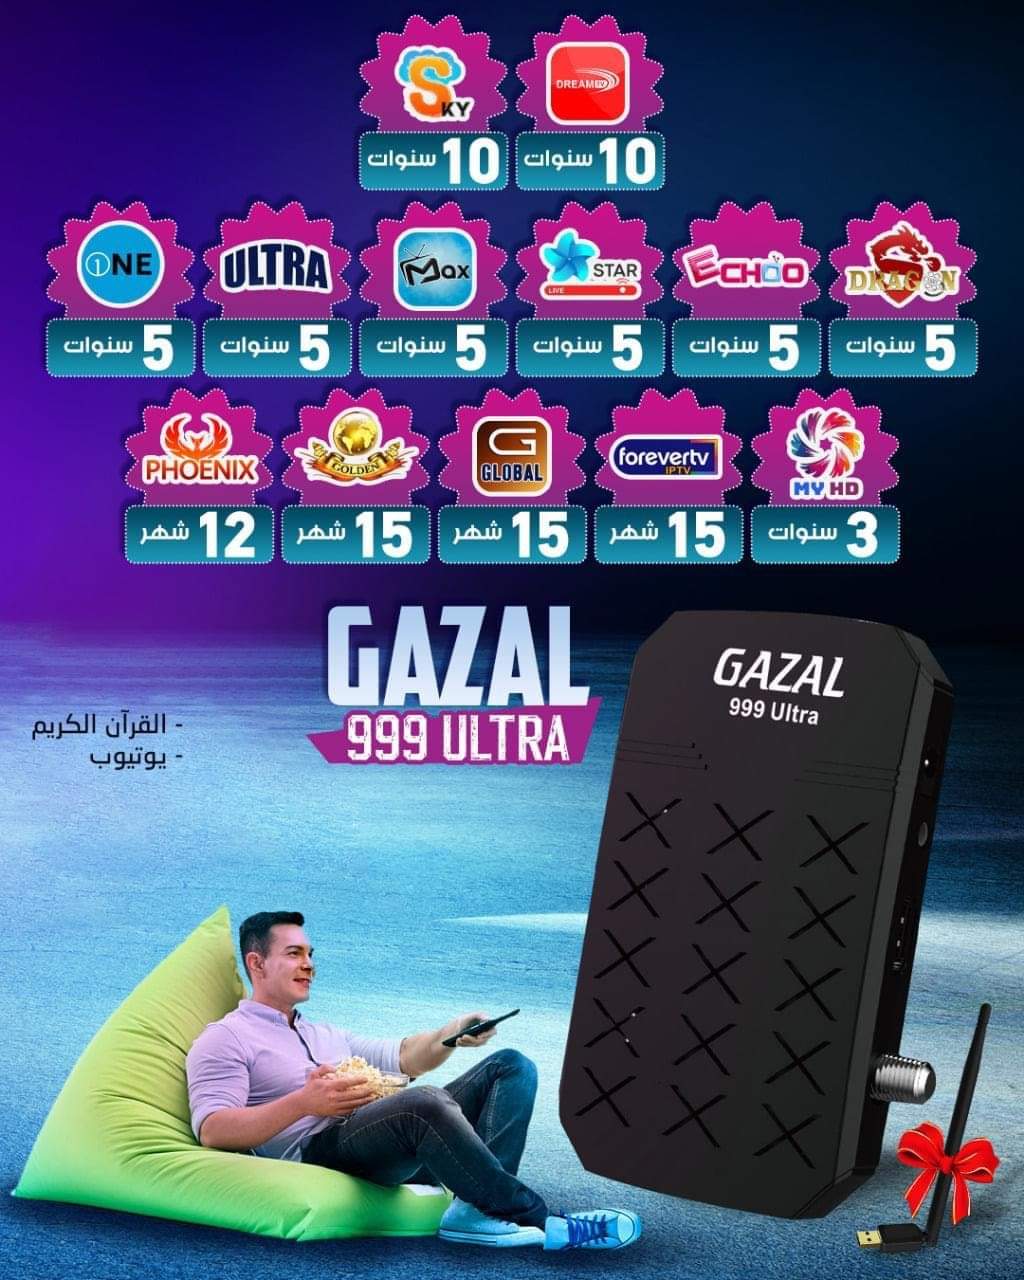 GAZAL 999 ULTRA غزال 999 الترا